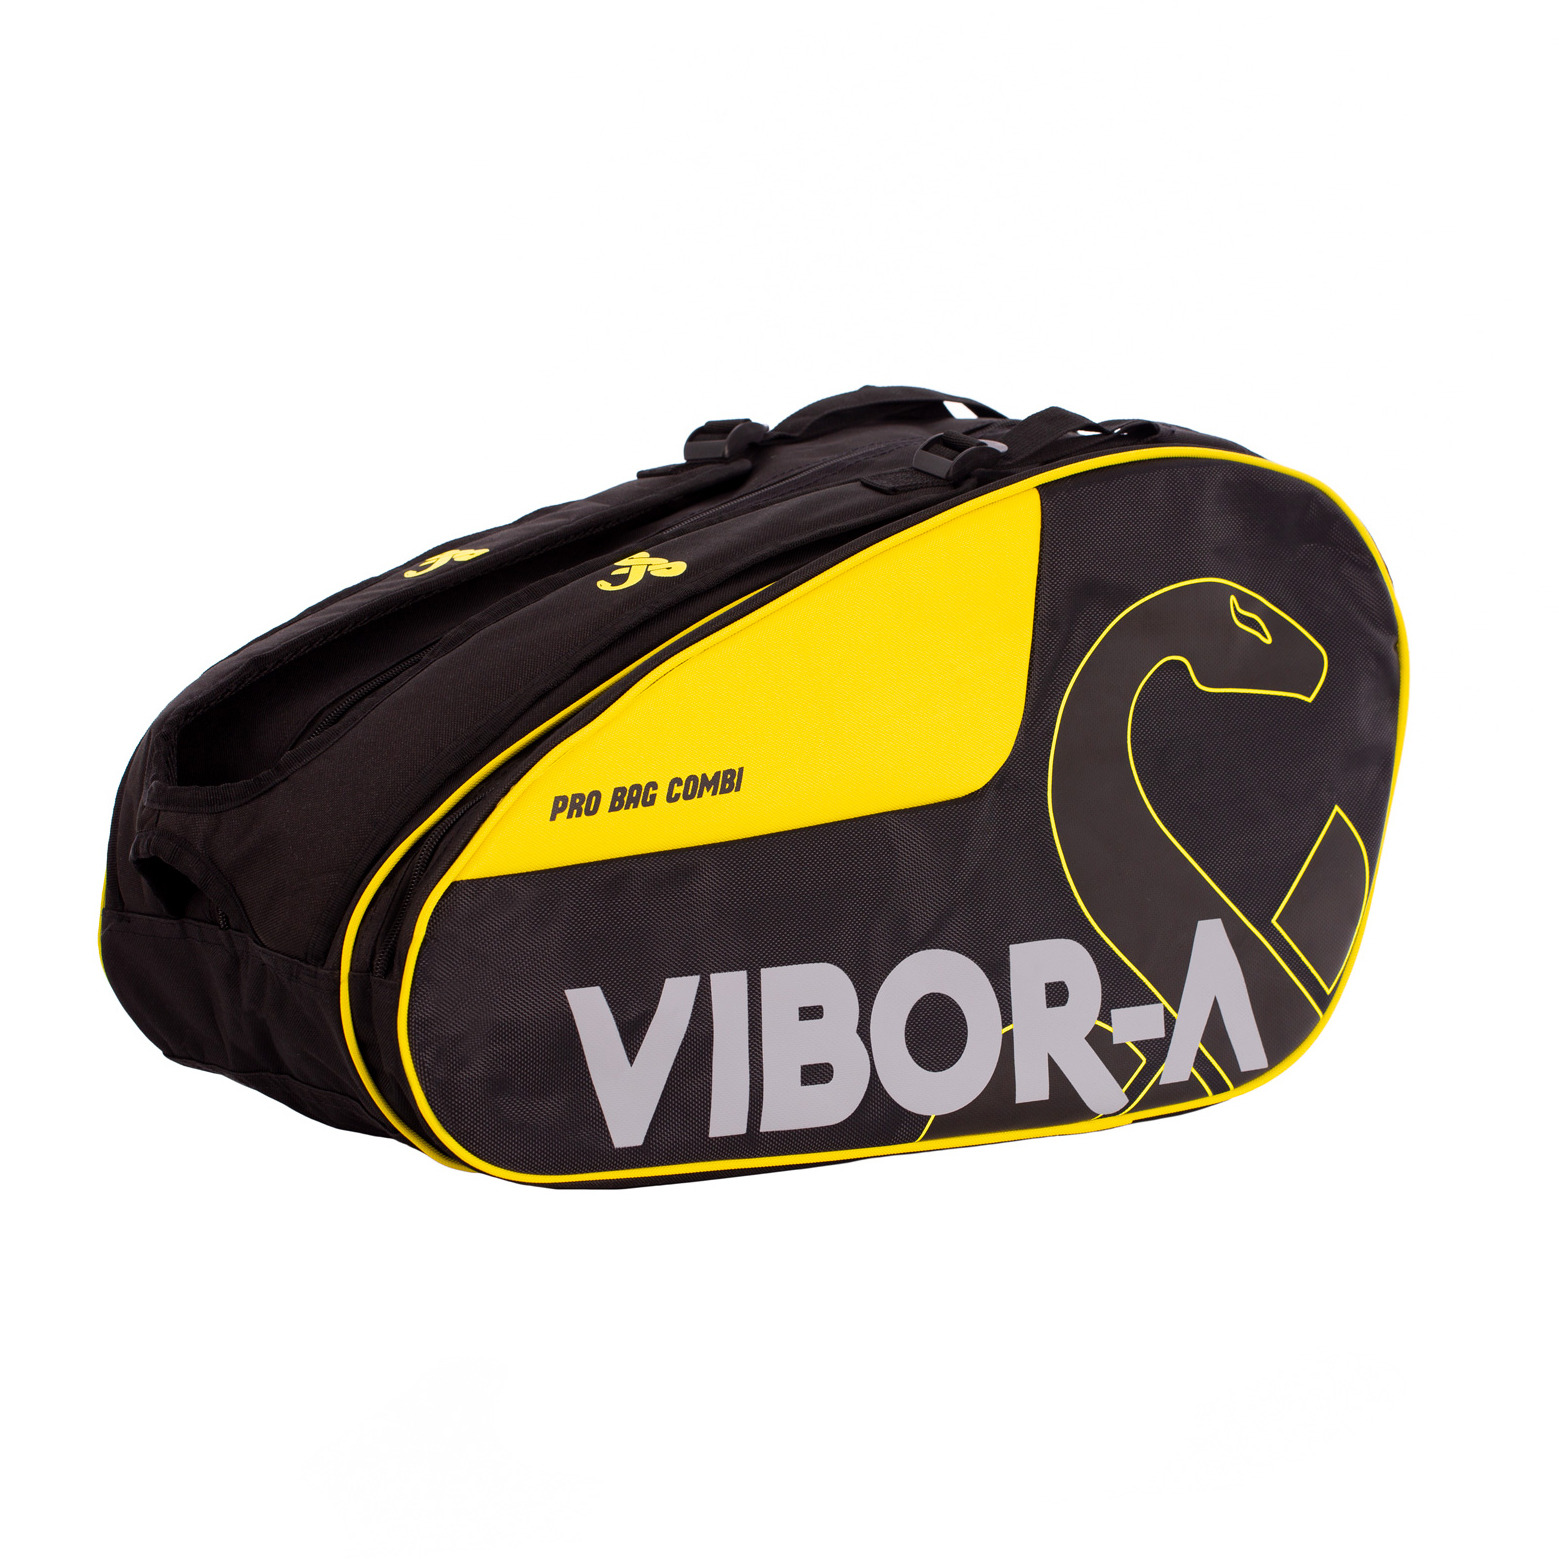 Paletero Vibor-A Pro Bag Combi